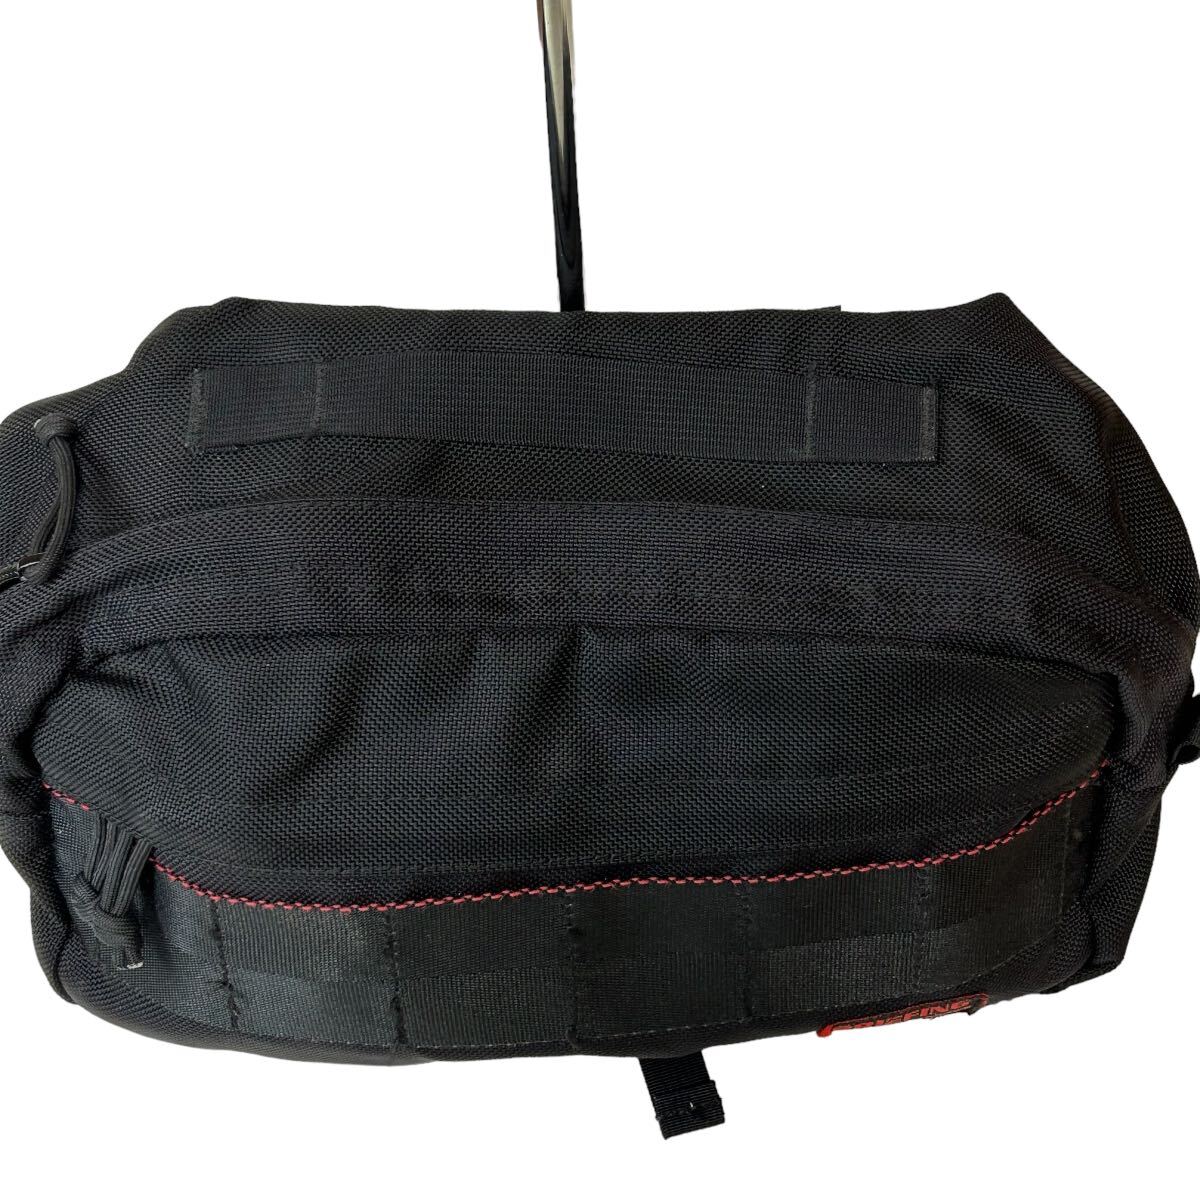  complete sale model rare Briefing varistor nylon body bag black 